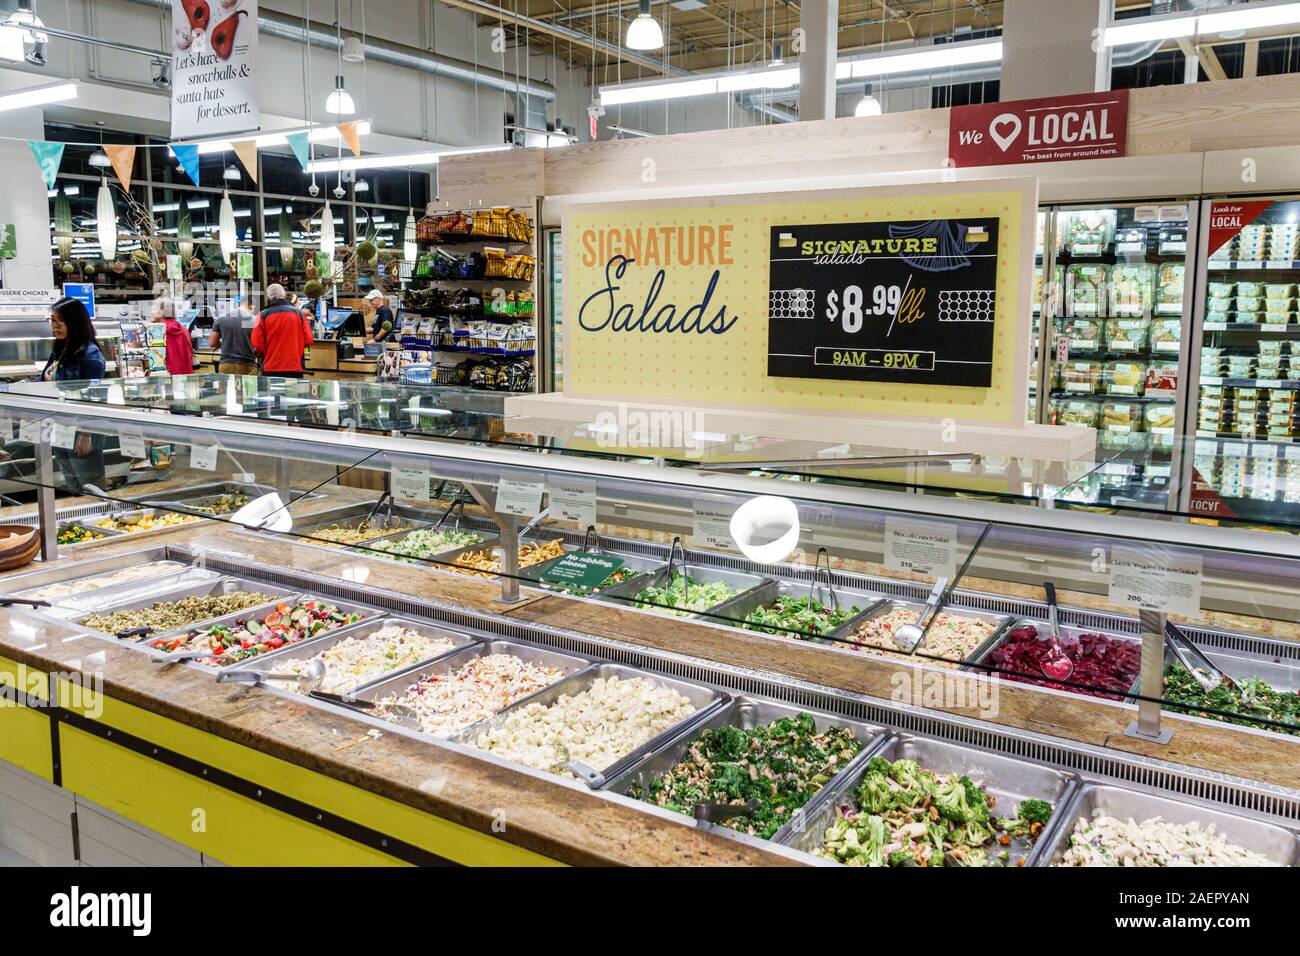 Orlando Florida,Whole Foods Market,supermarket grocery store,organic grocer,inside interior,deli,salad bar,prepared foods,sneeze guard,germ deterrent, Stock Photo